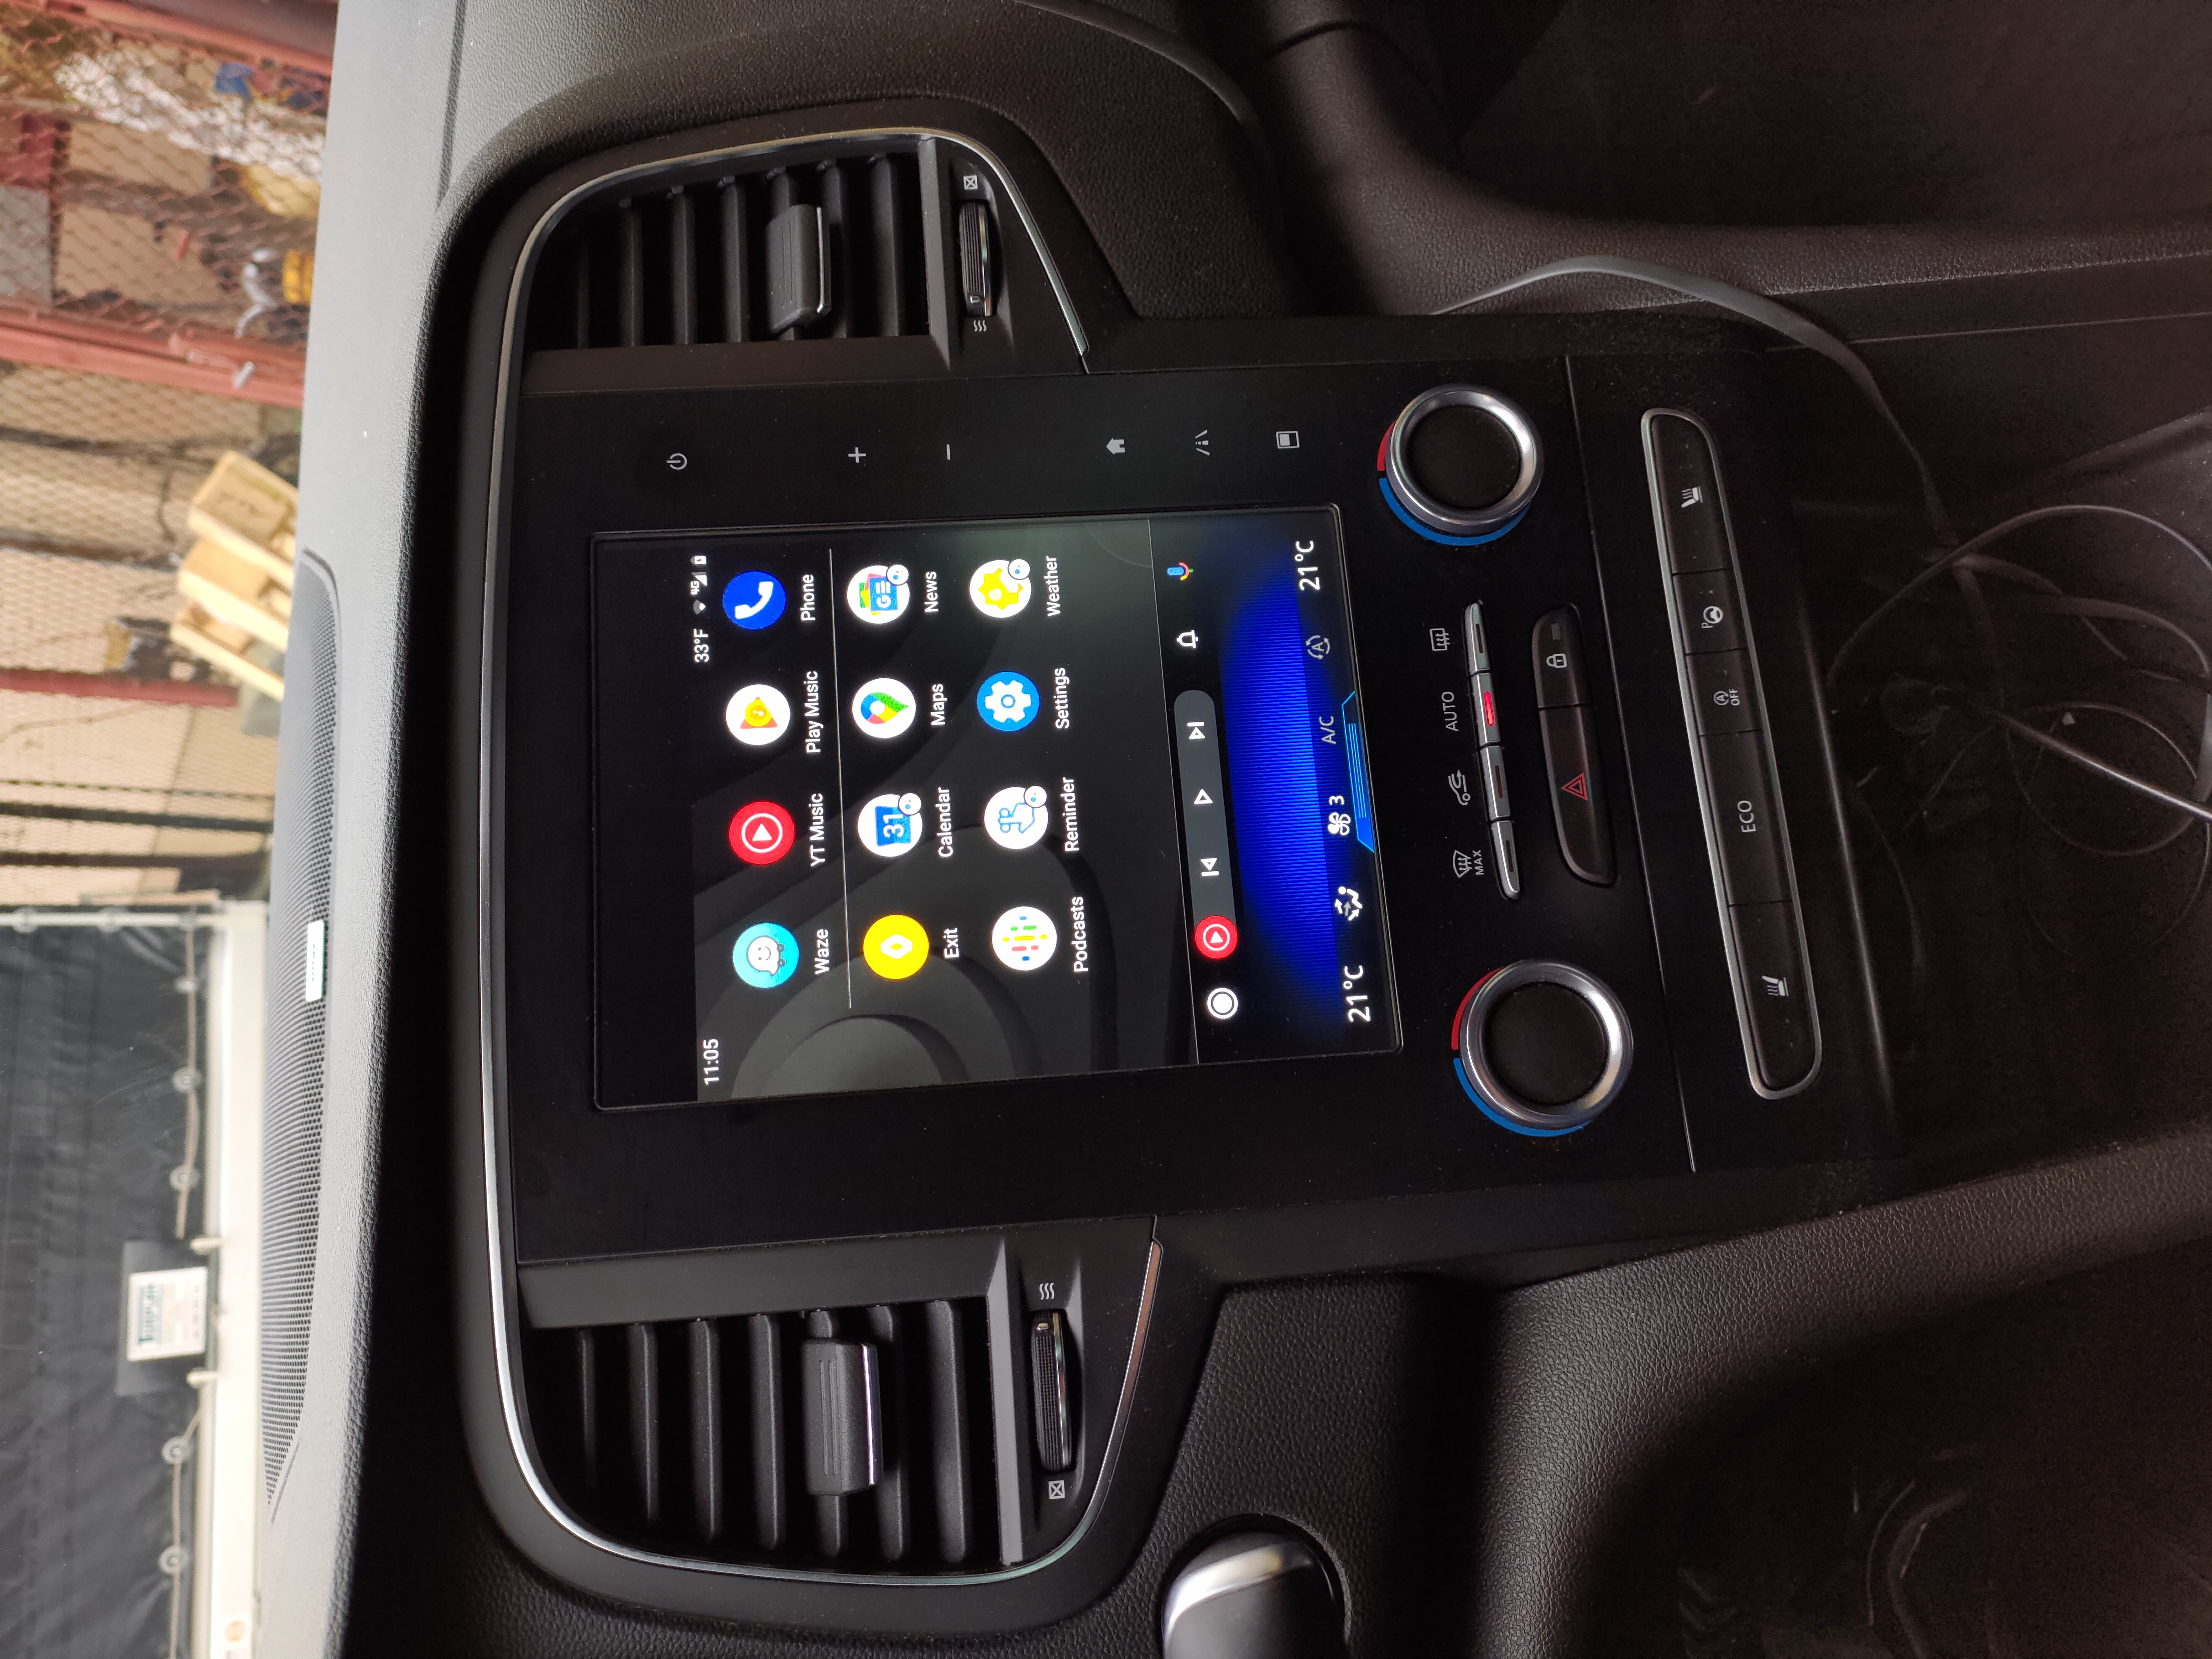 Android Auto 7.4. - Full phone mirroring, , NetFlix